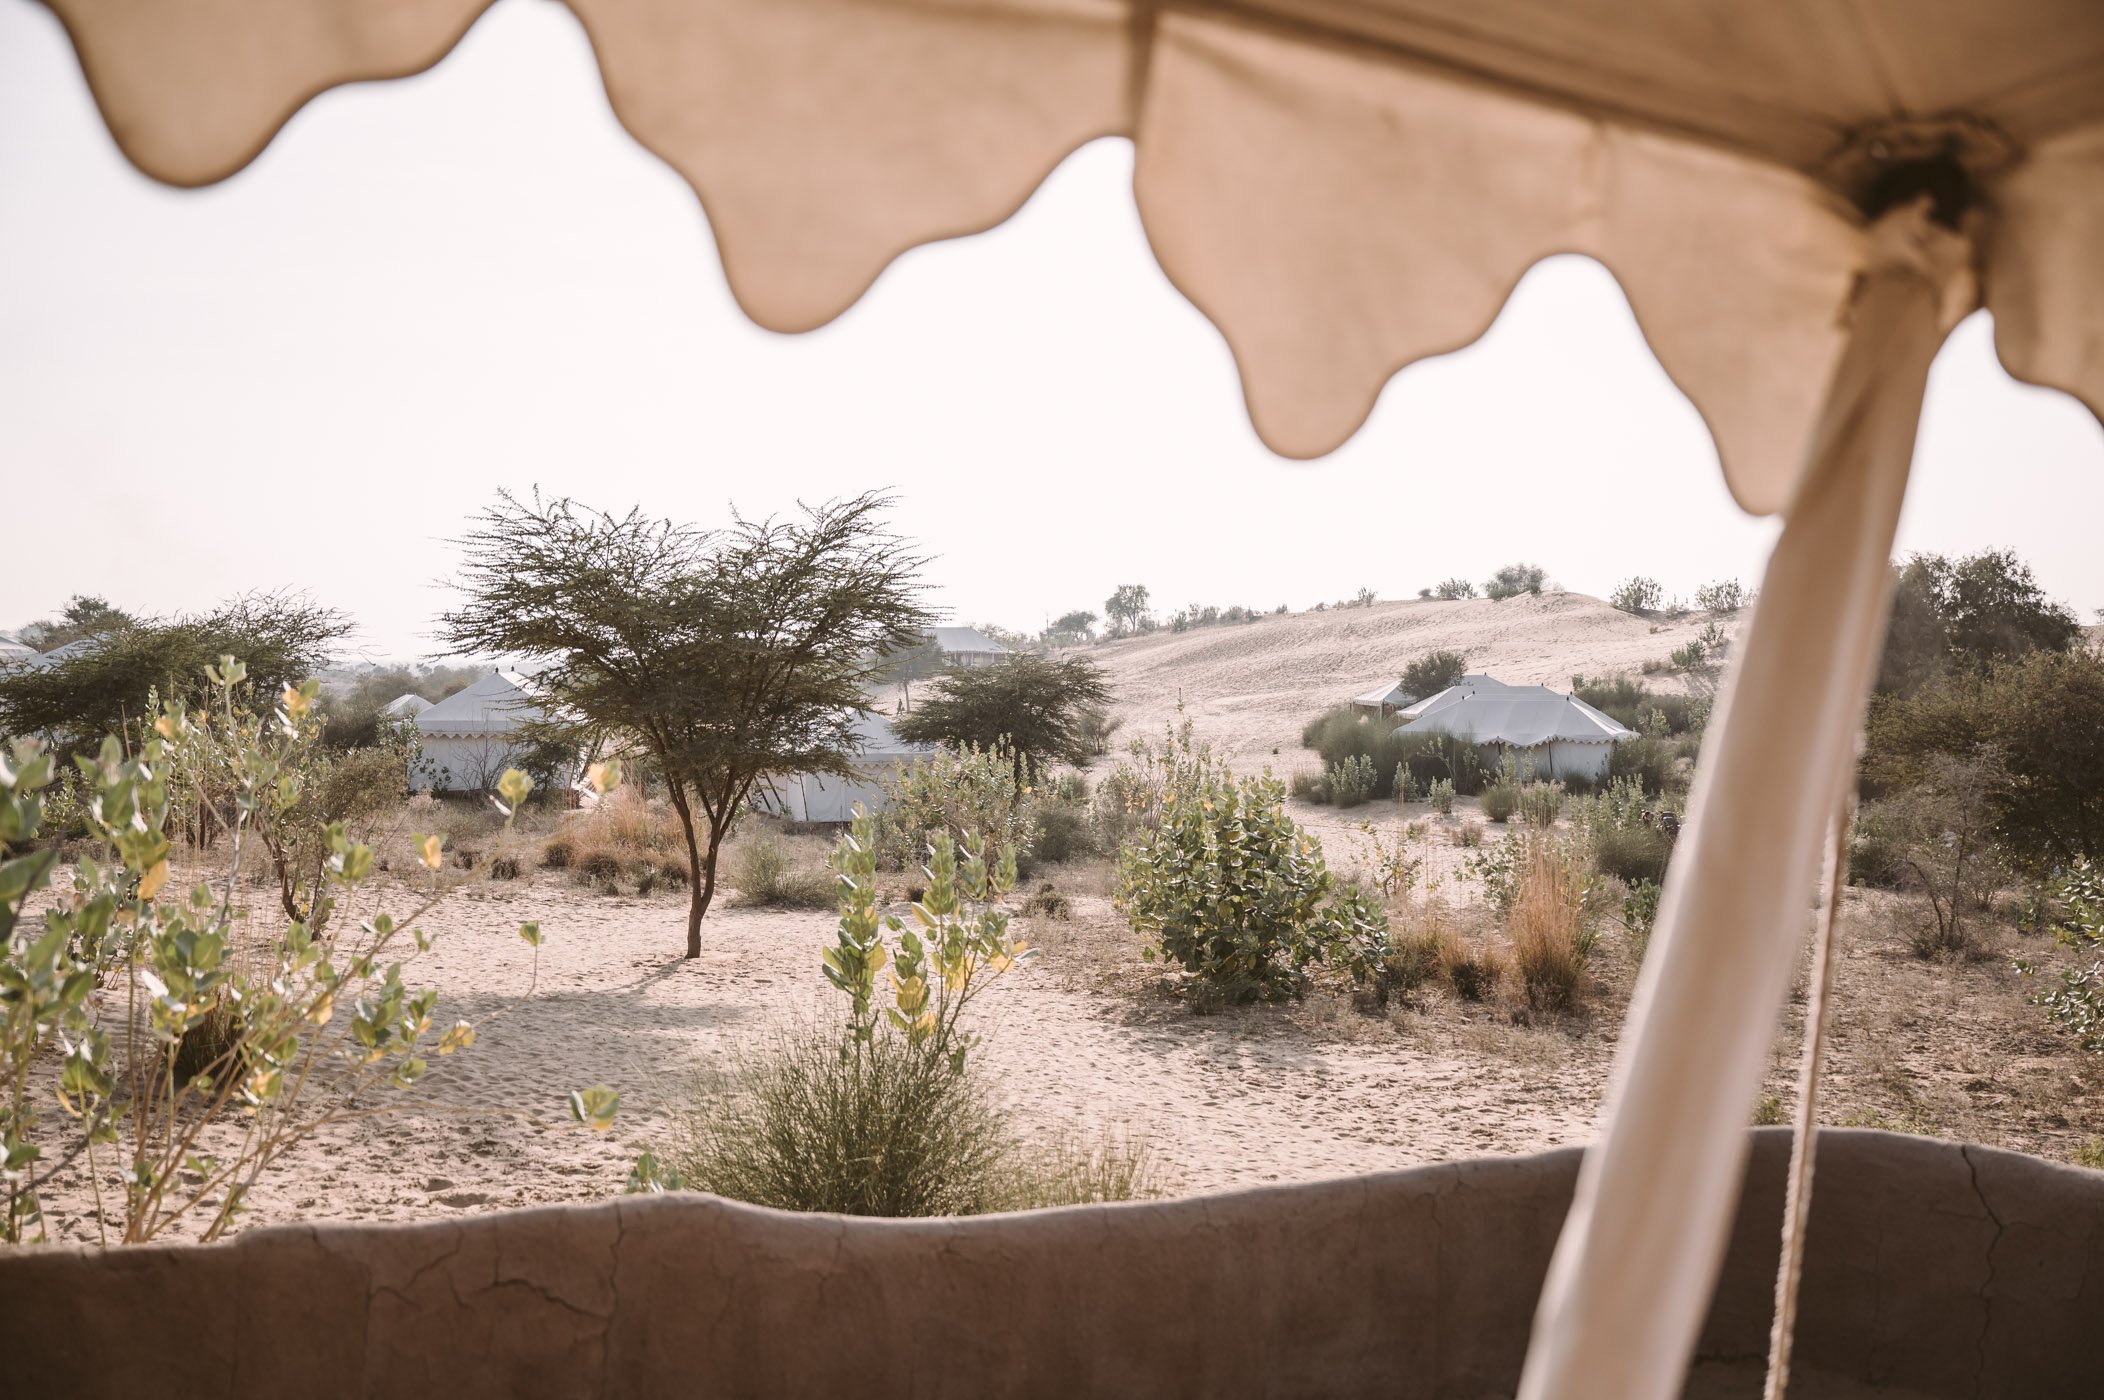 Desert camp in Rajasthan